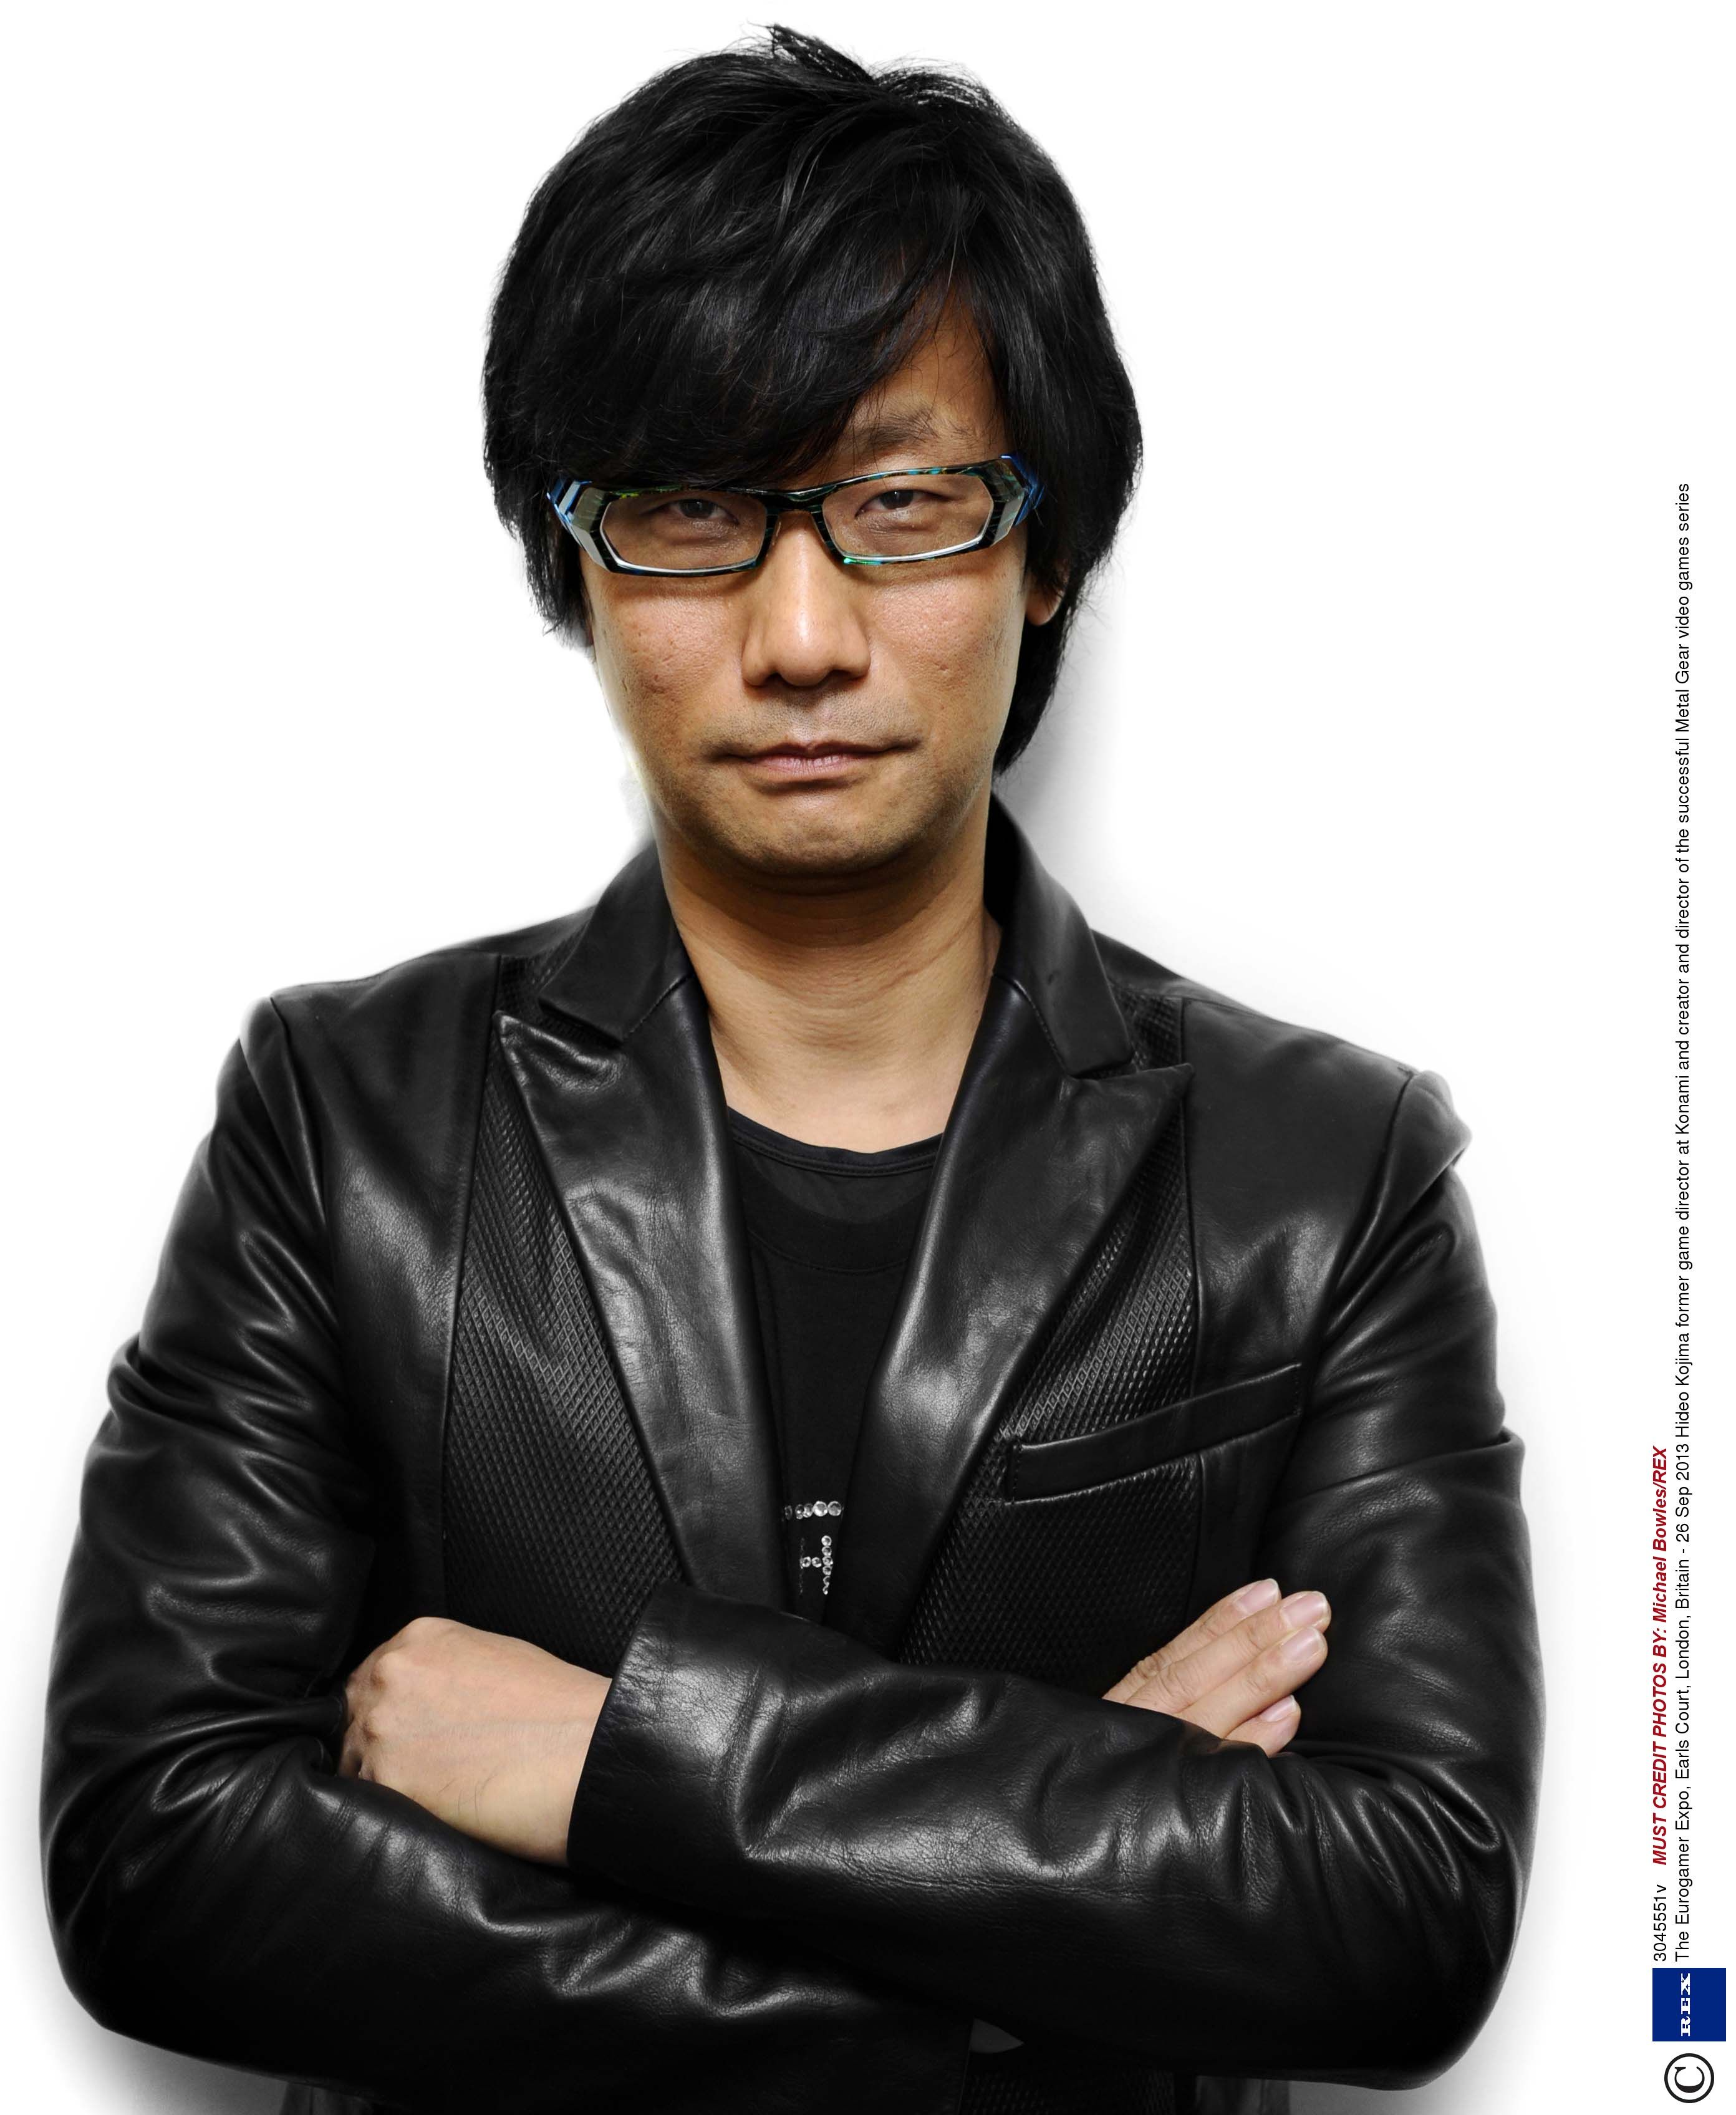 Konami releases new statement on Hideo Kojima